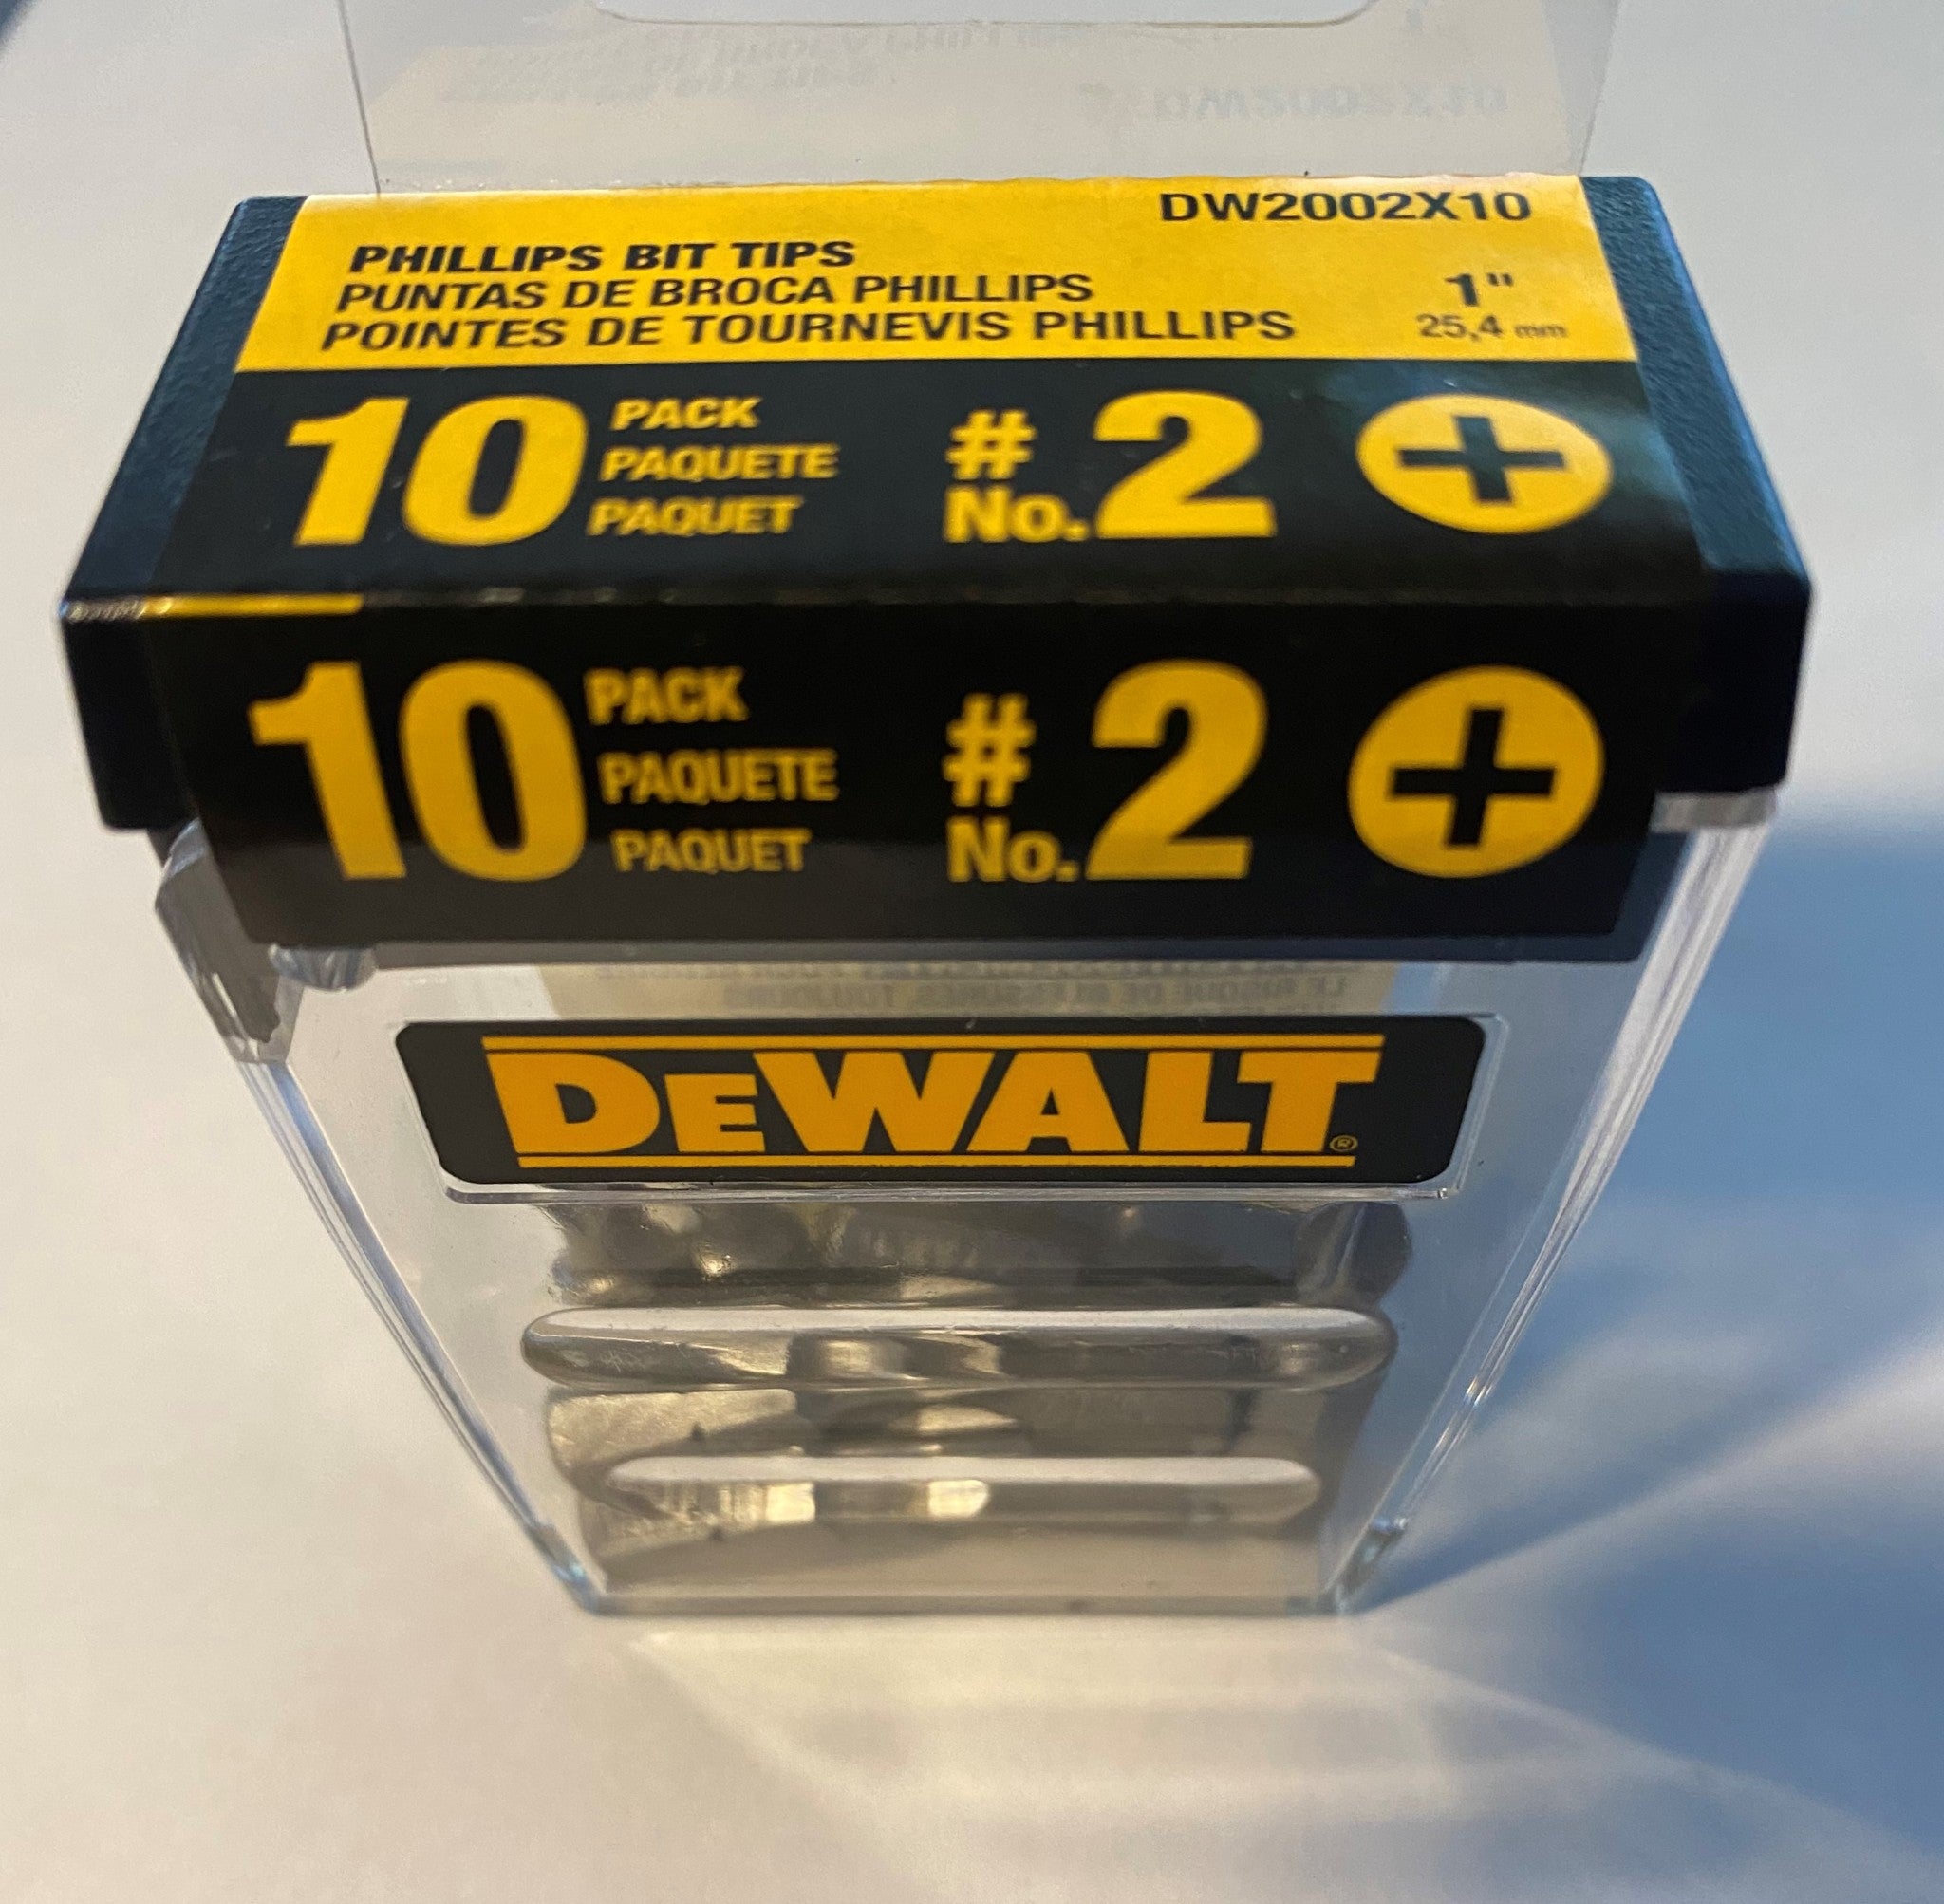 DEWALT DW2002X10 #2 Phillips 1-Inch Bit Tips with Bit Box (10-Pack)